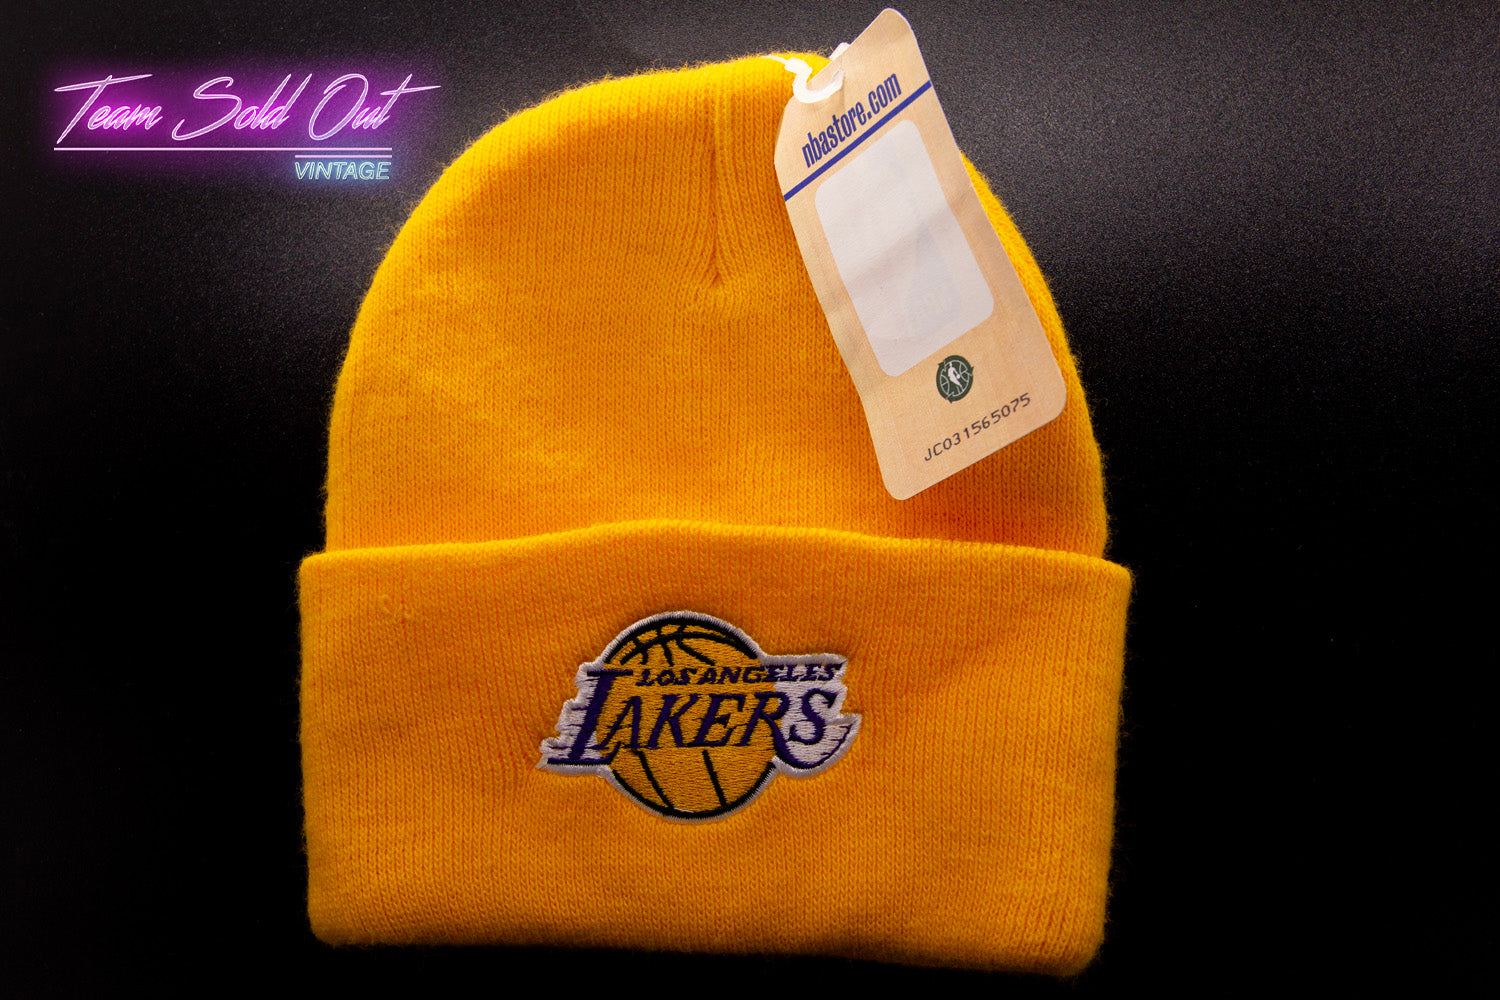 Adidas Los Angeles Lakers Yellow Beanie NBA